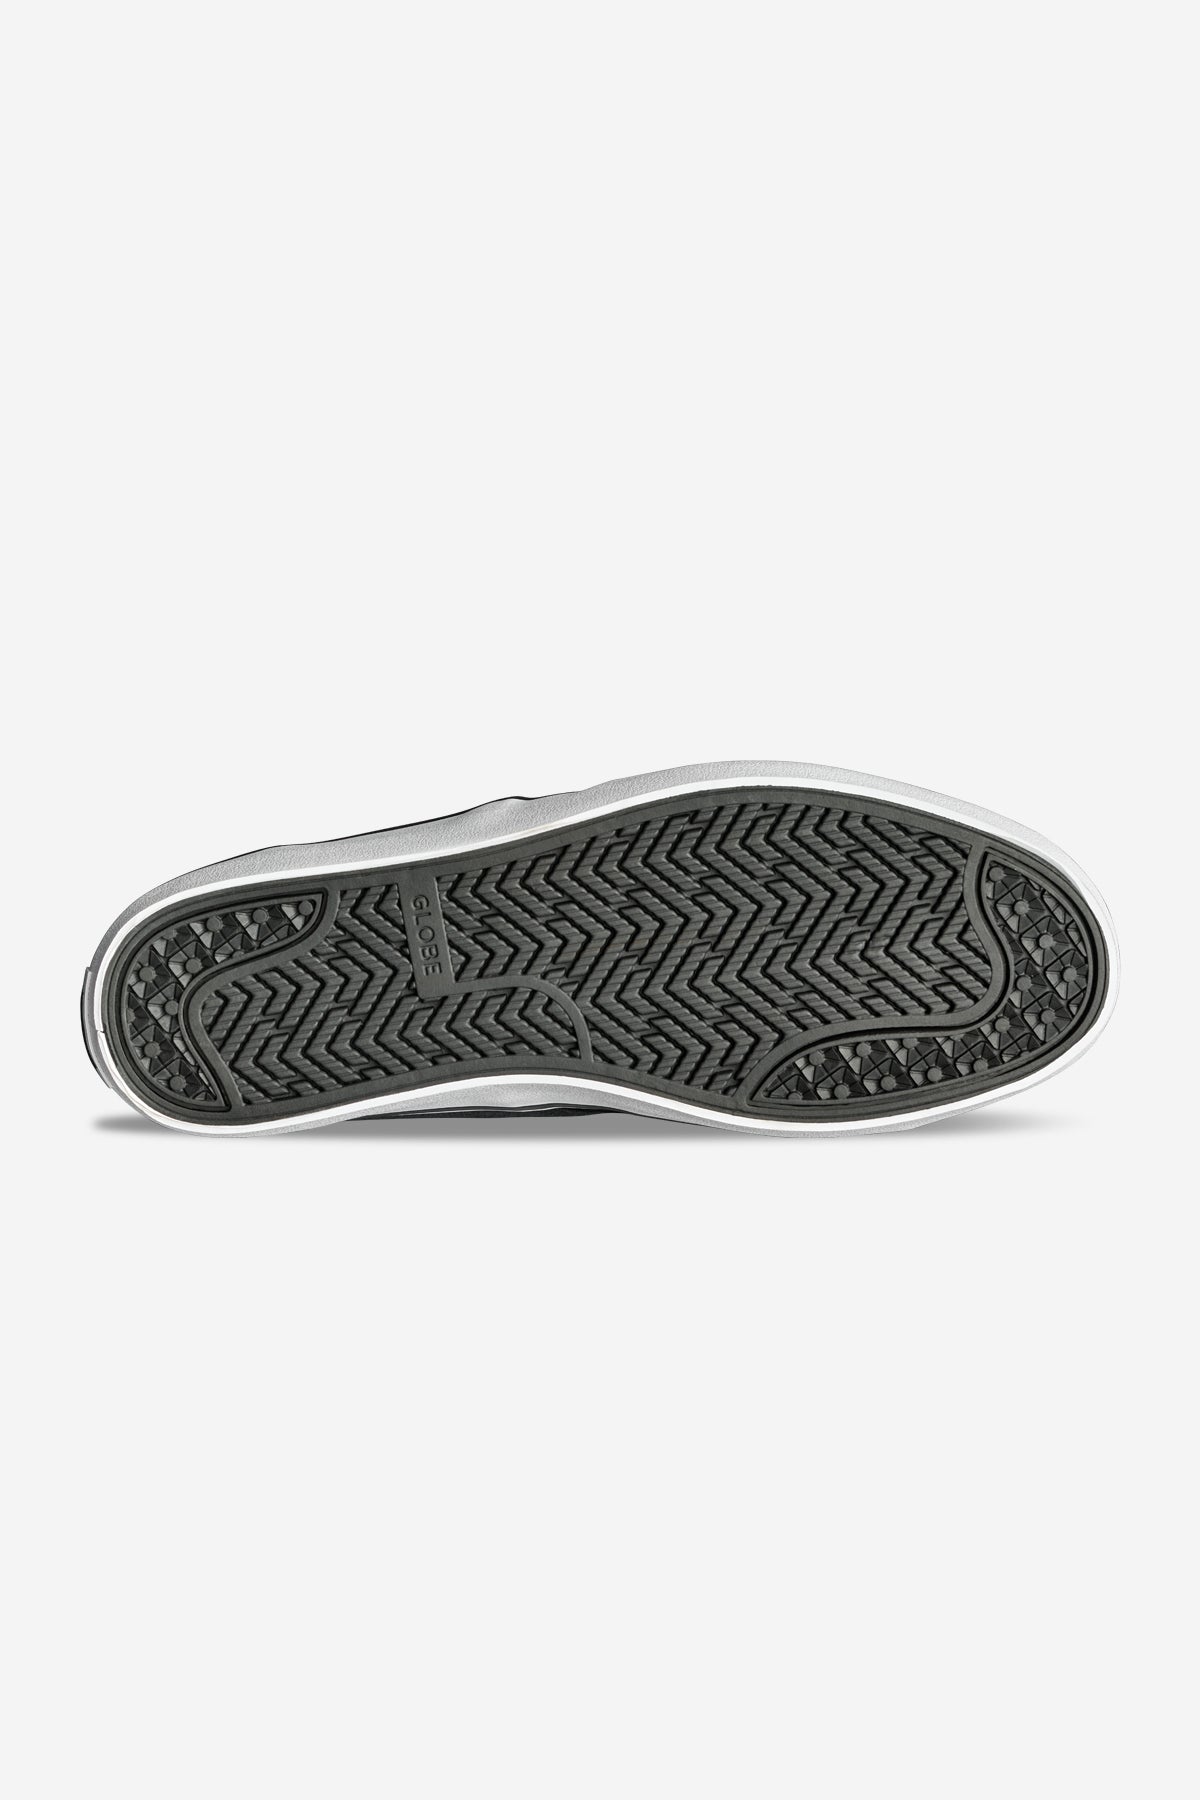 motley ii strap black white skate shoes